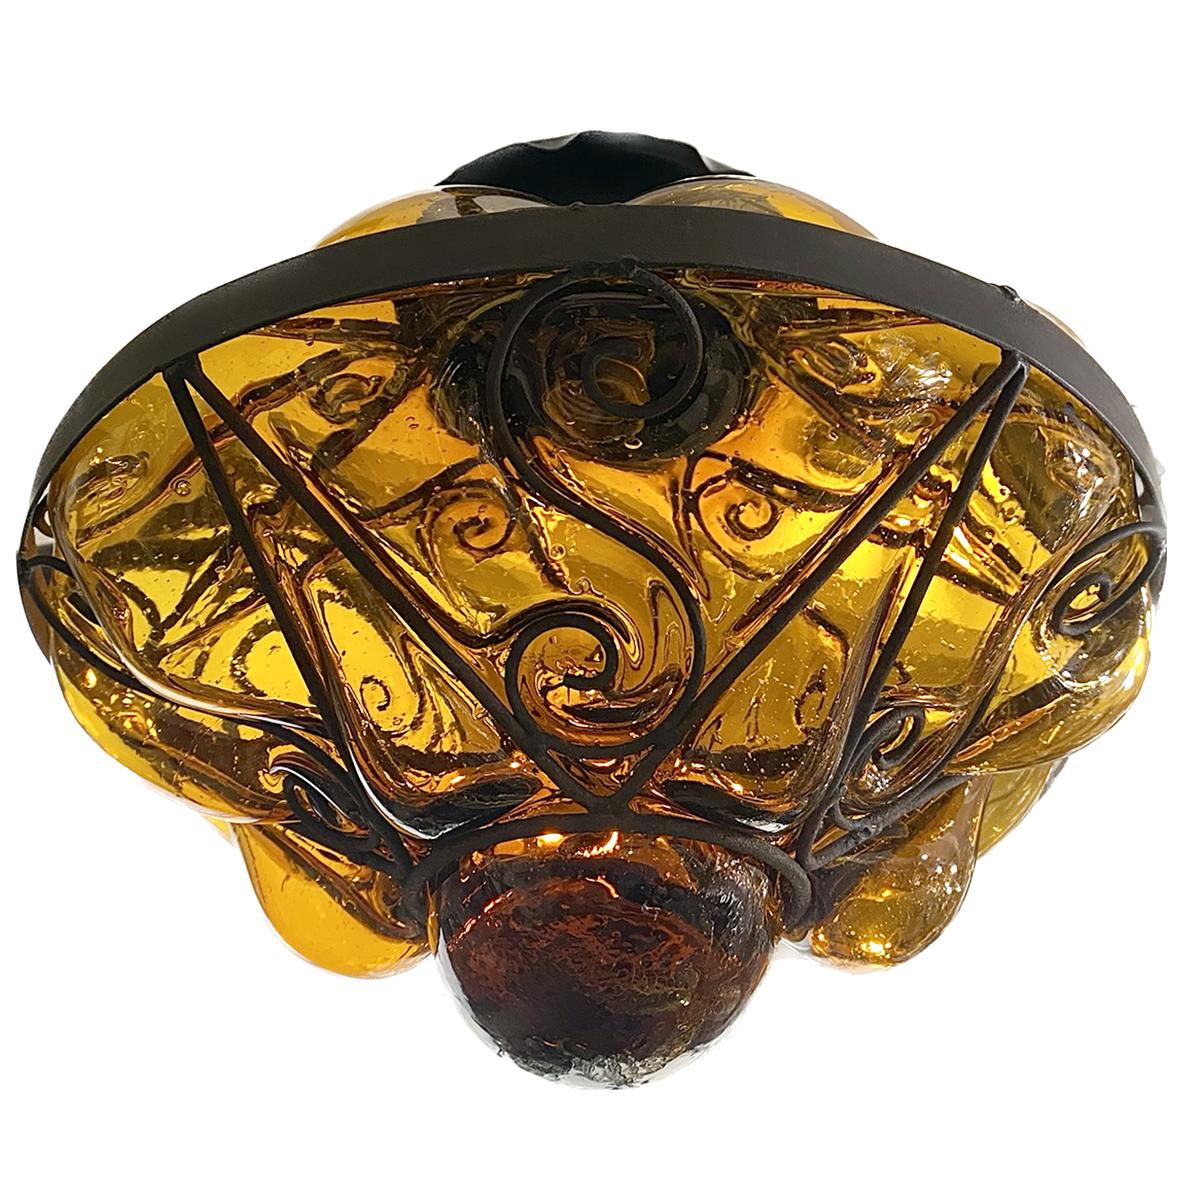 A circa 1950's Italian amber blown glass lantern.

Measurements:
Drop: 15